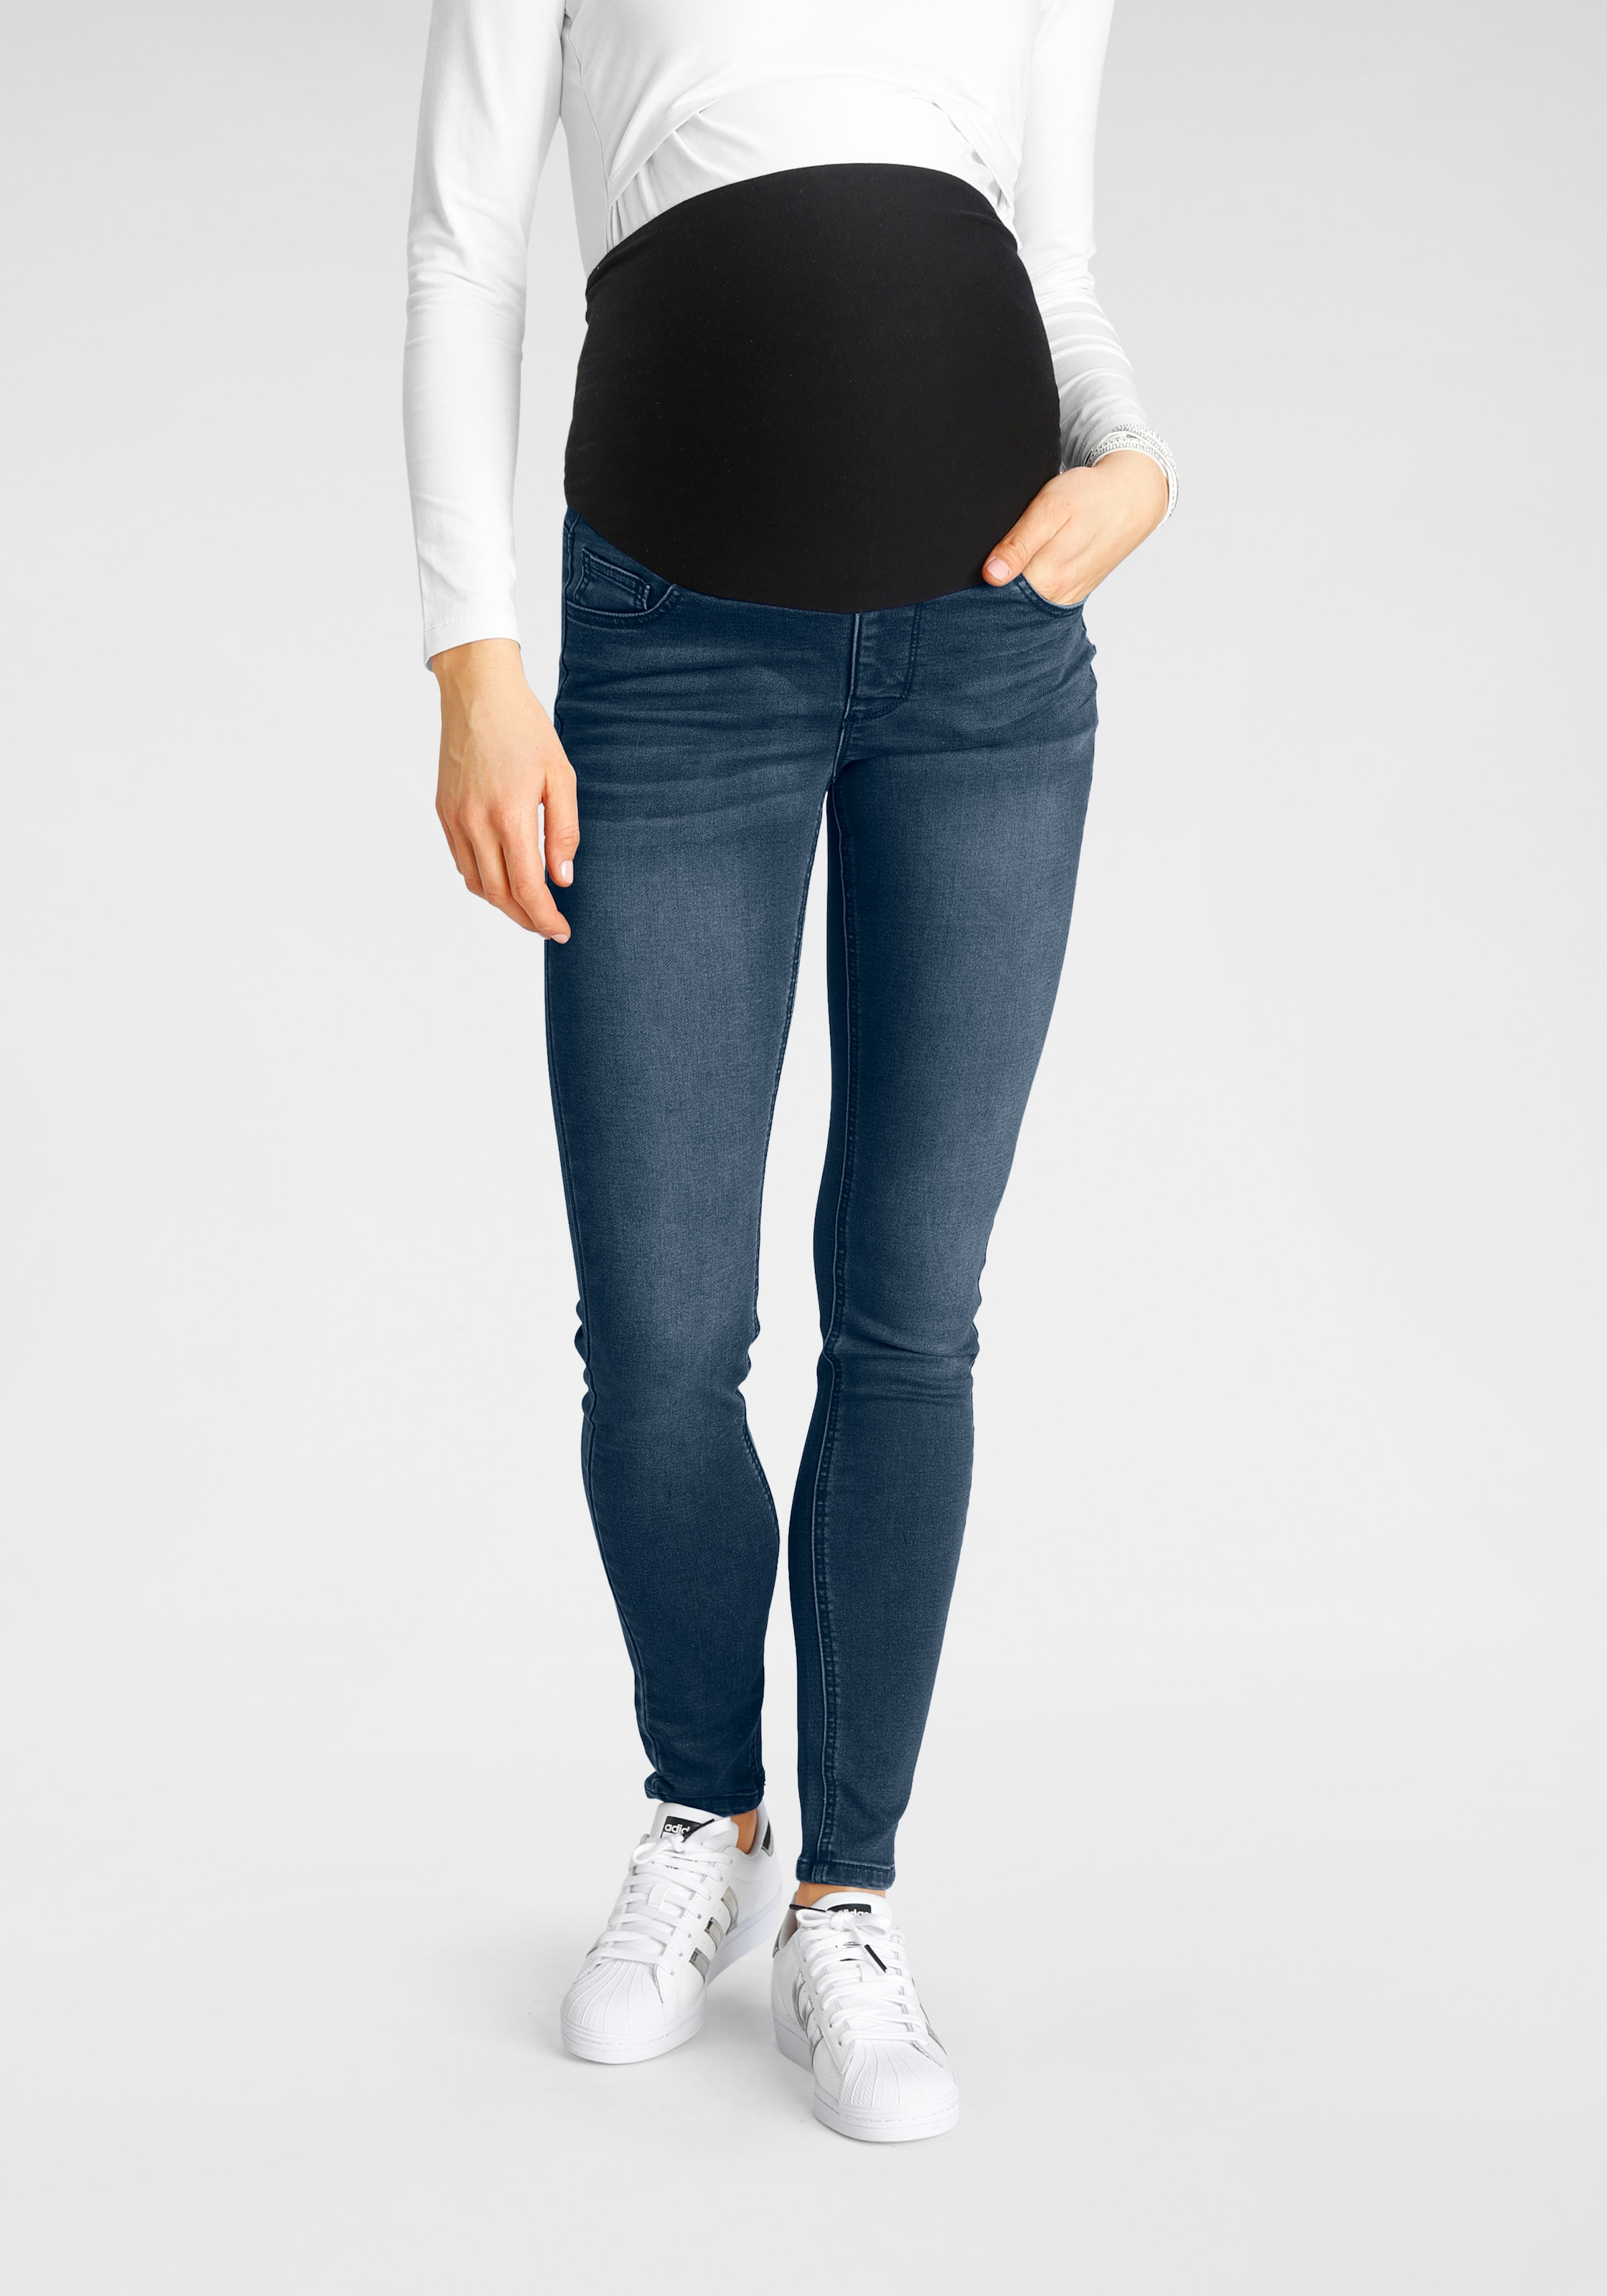 Neun Monate Umstandsjeans », Jeans für Schwangerschaft und Stillzeit«, Umstandsjeans aus trendigem Jogg-Denim